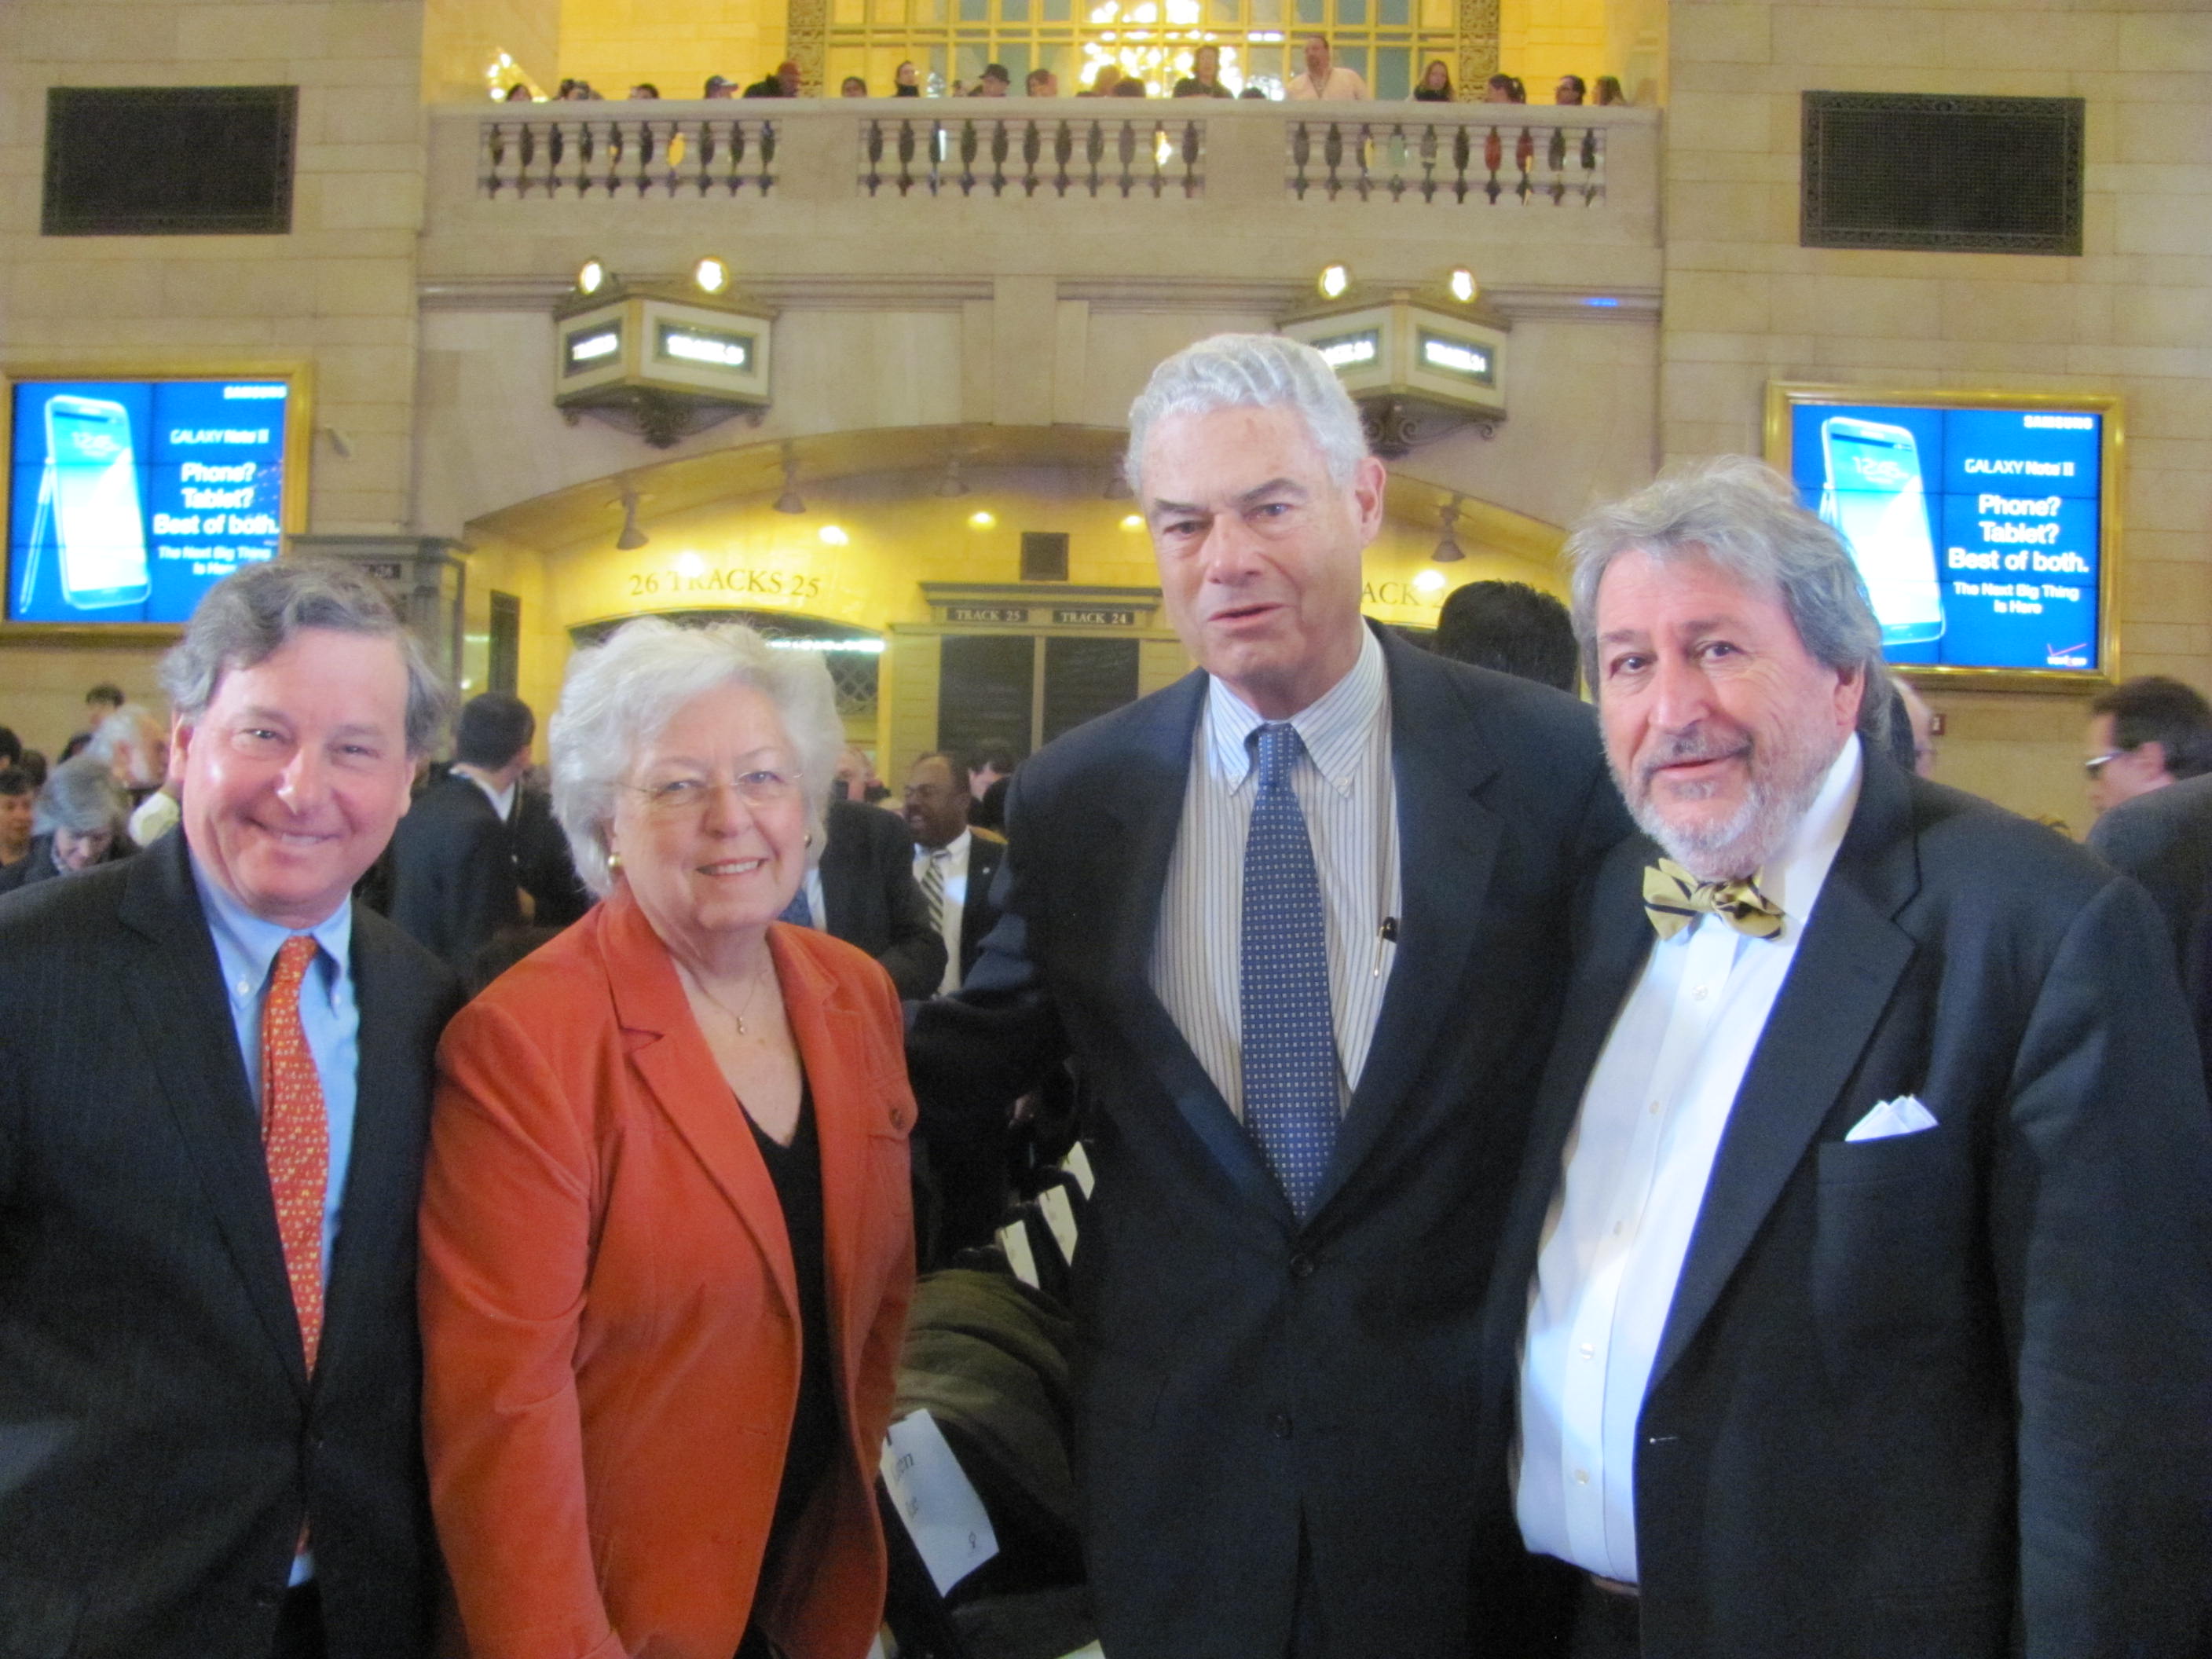 Assemblyman Otis attends the Centennial Celebration of Grand Central Terminal.